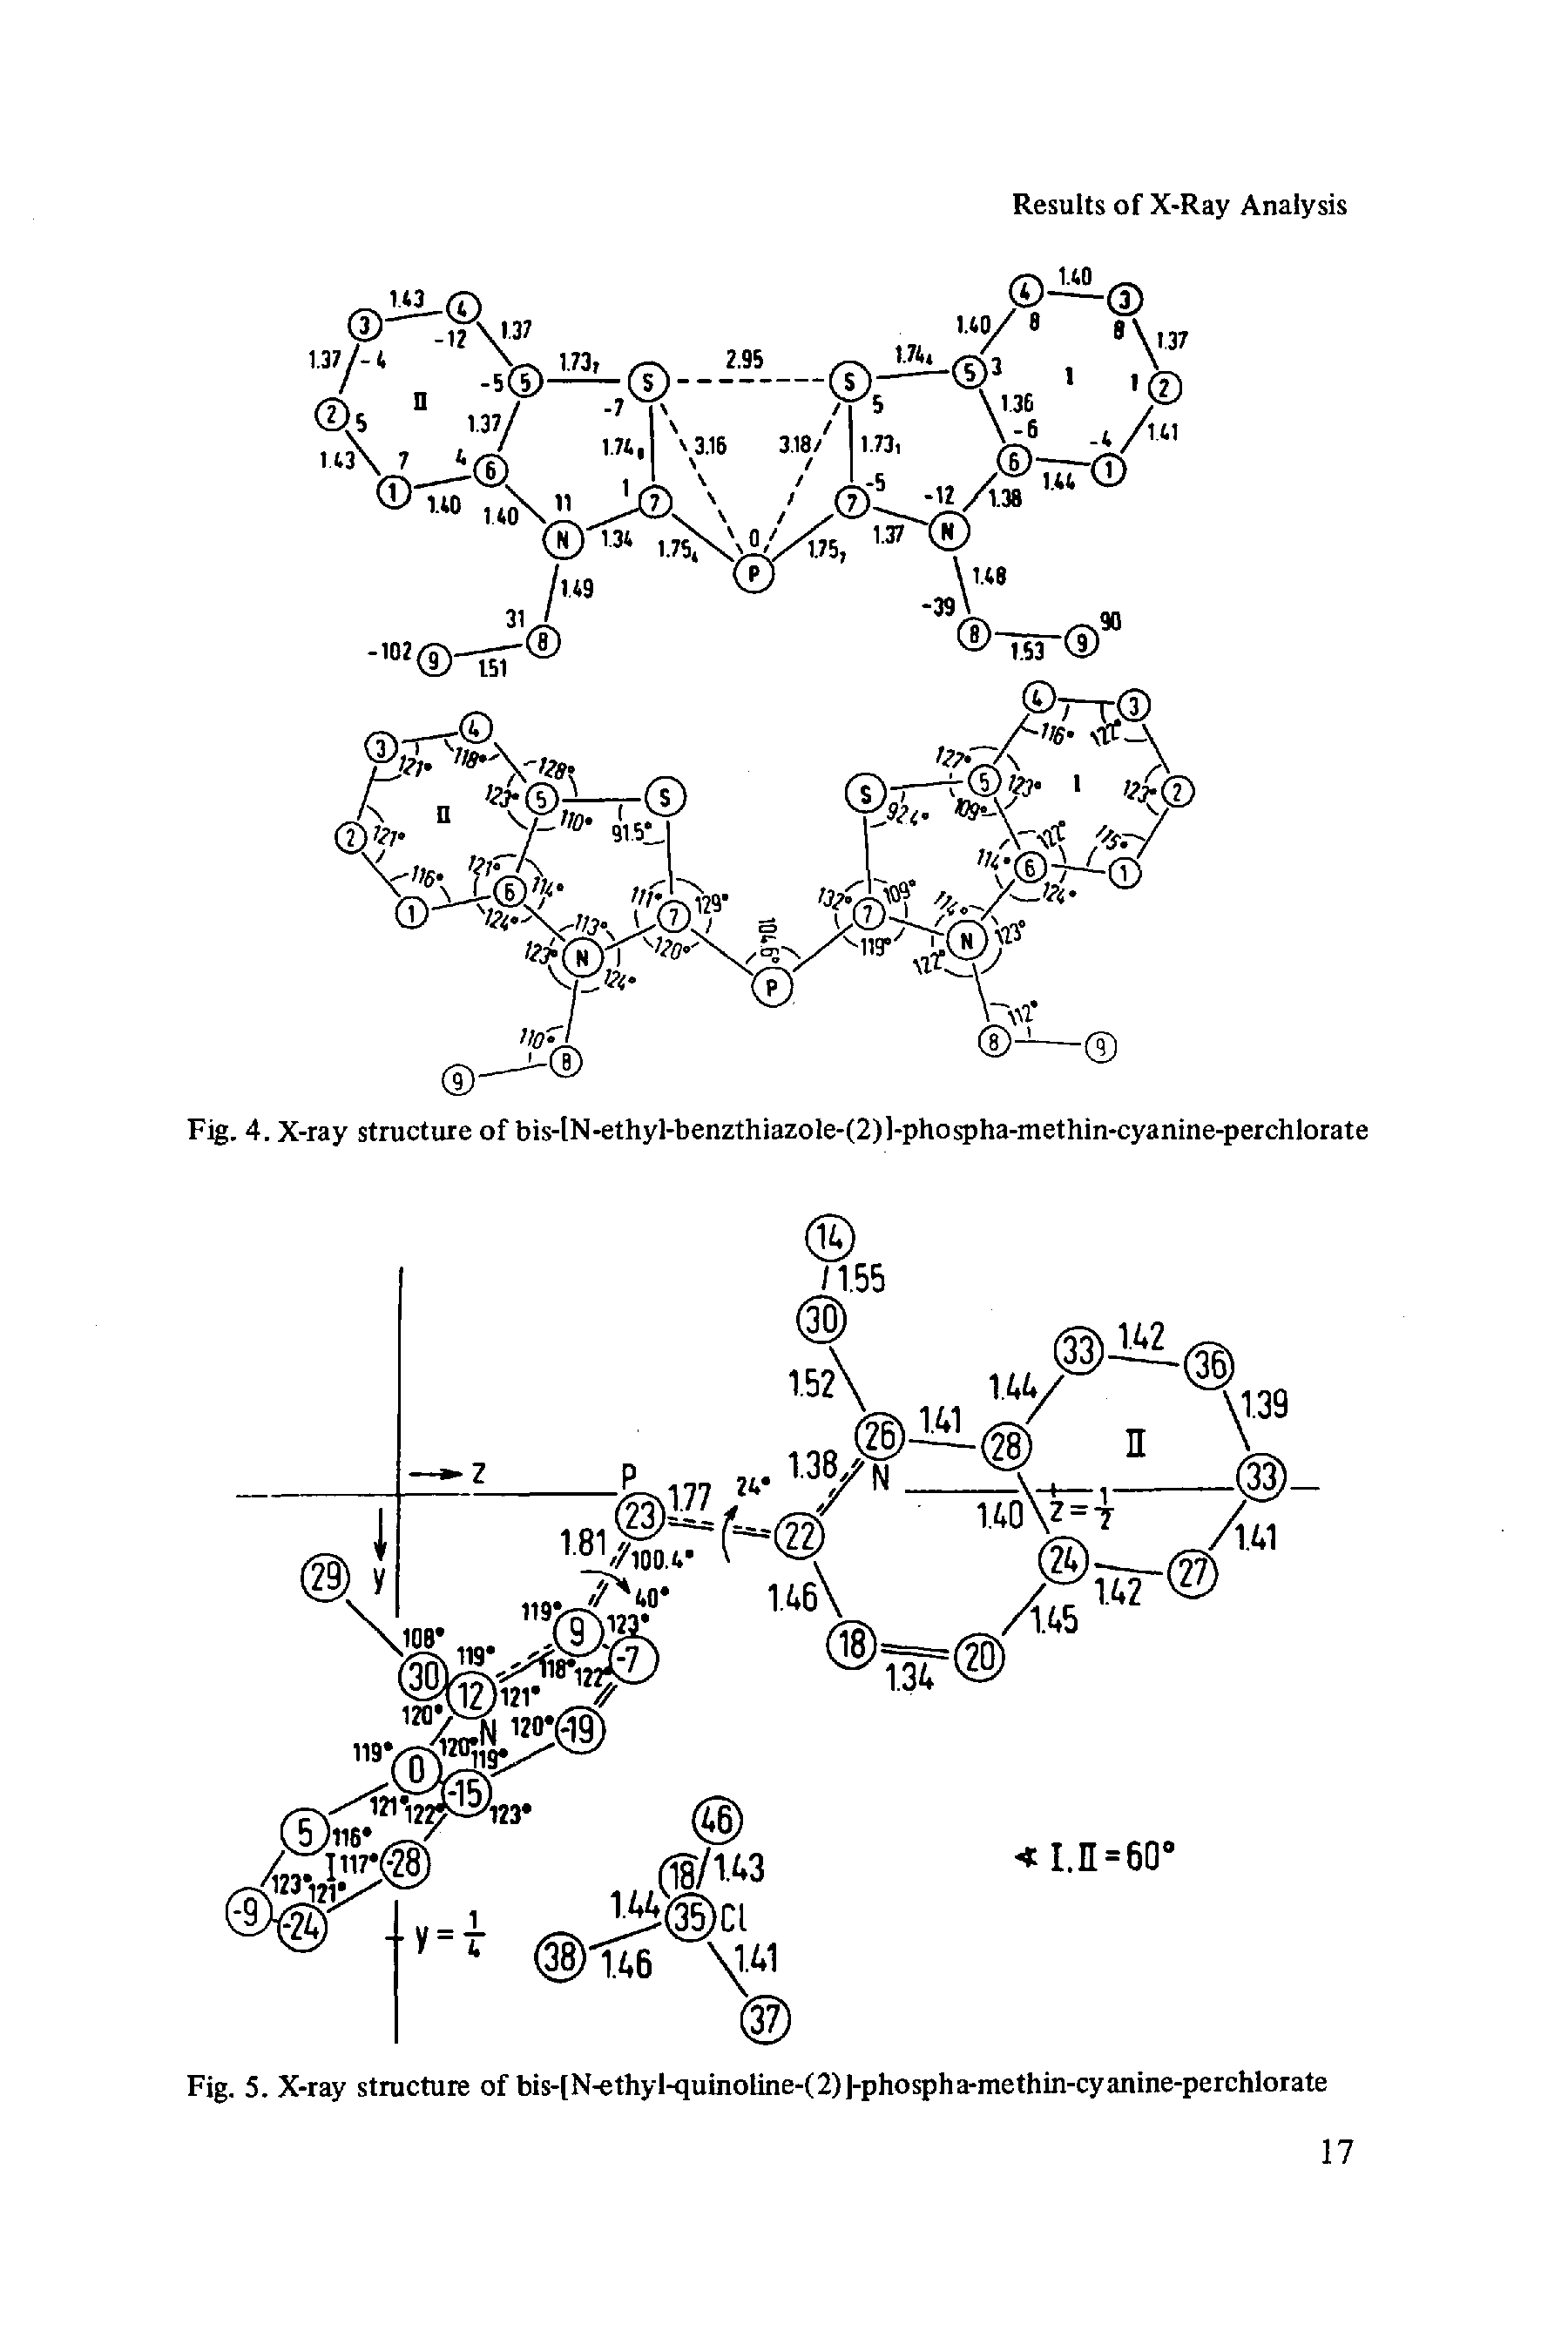 Fig. 4. X-ray structure of bis-lN-ethyl-benzthiazoIe-(2)l-phospha-methin-cyanine-perchlorate...